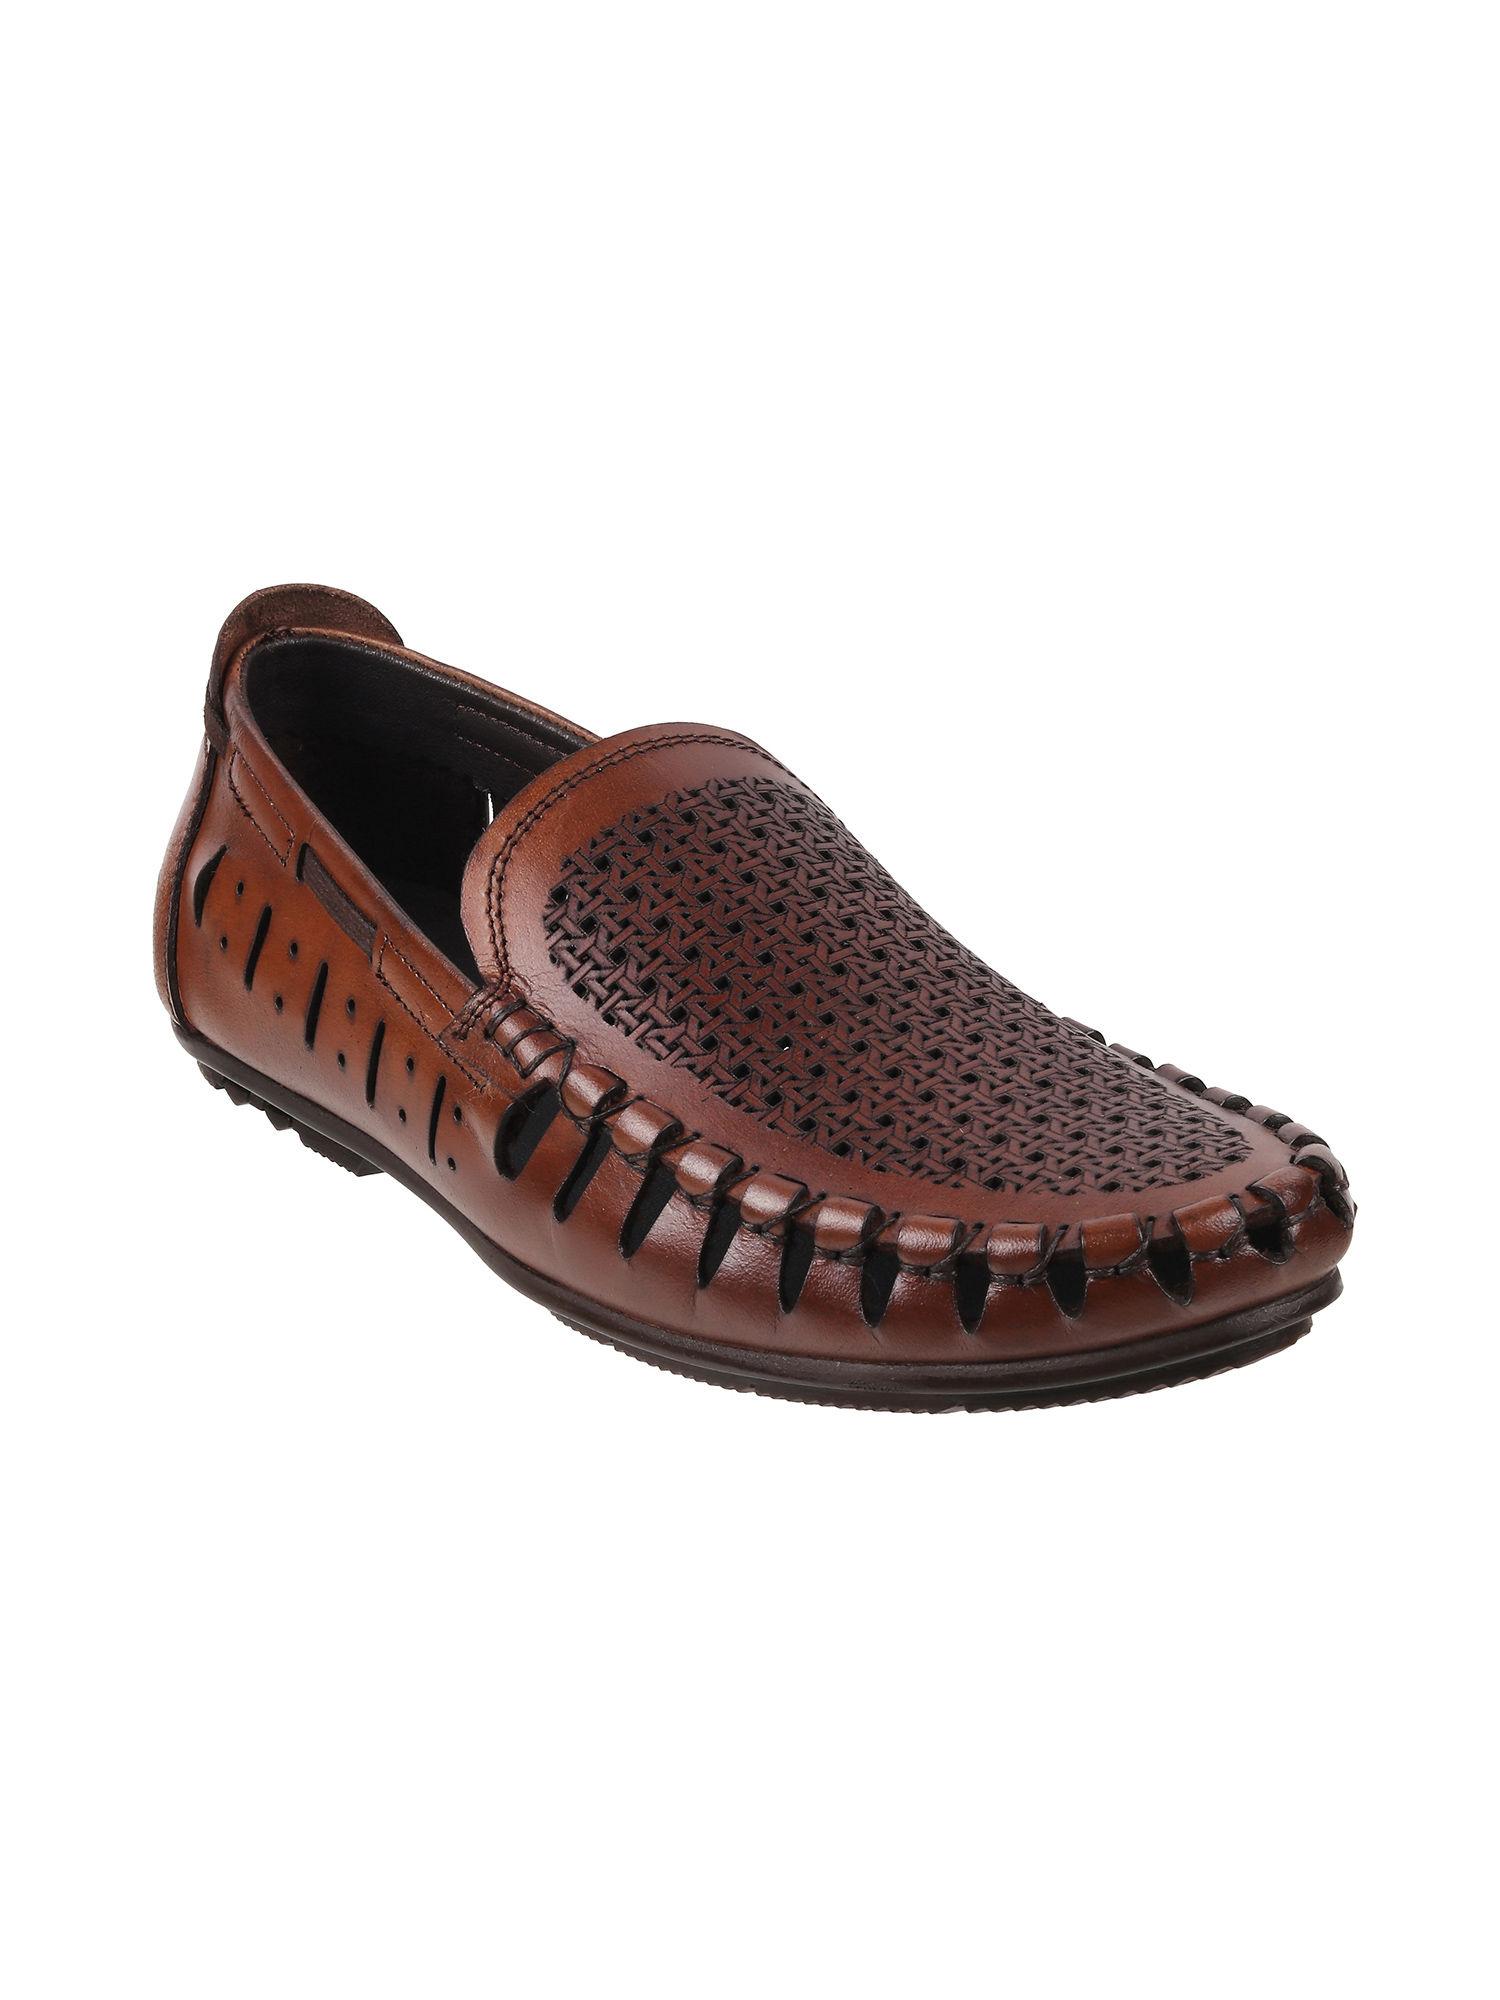 men leather tan closed toe sandals